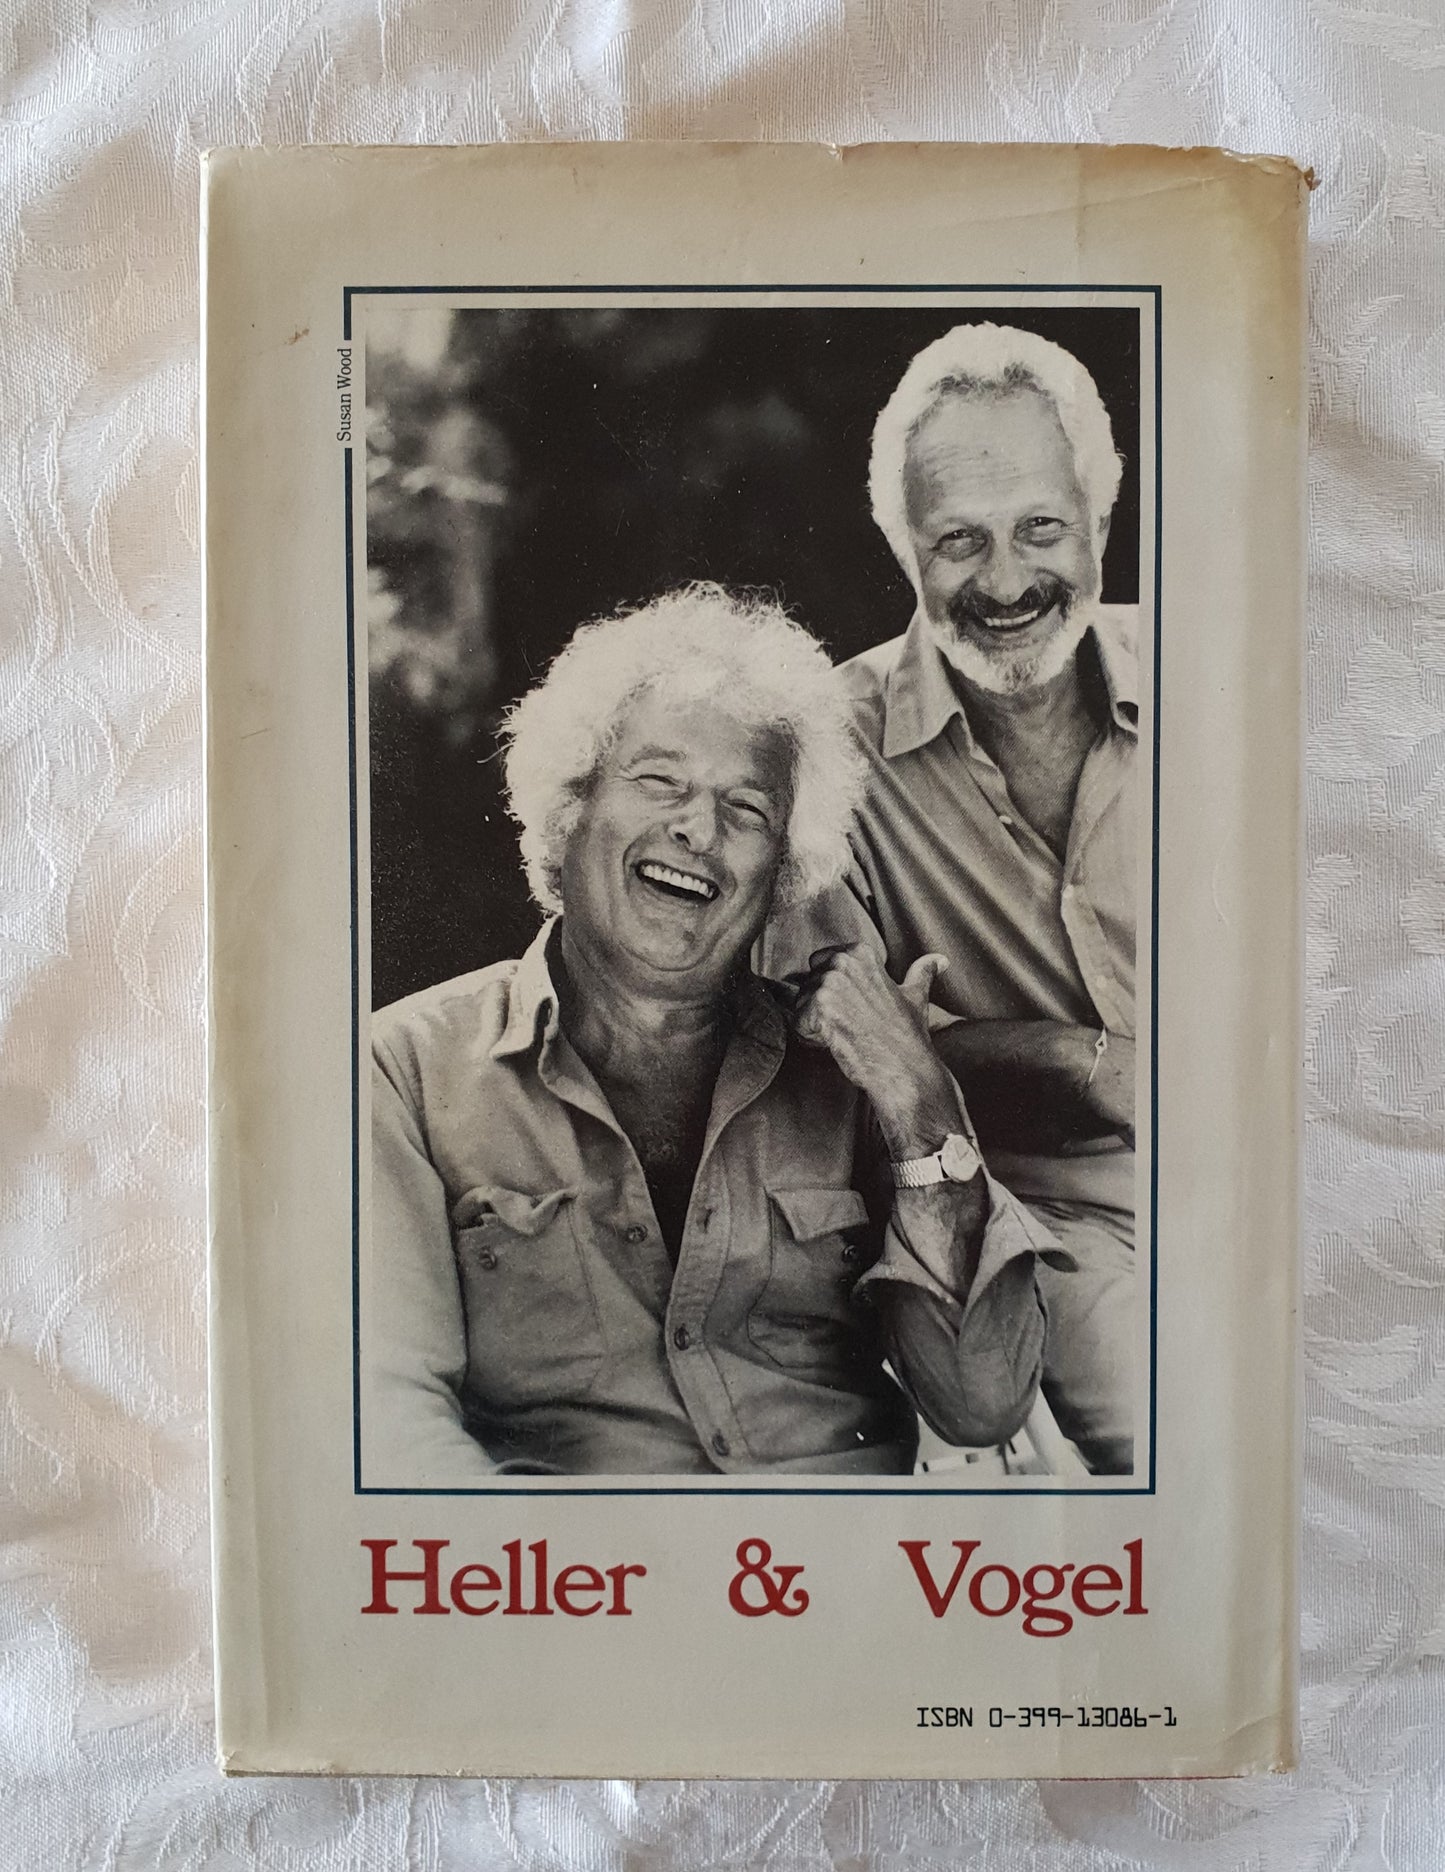 No Laughing Matter by Joseph Heller & Speed Vogel